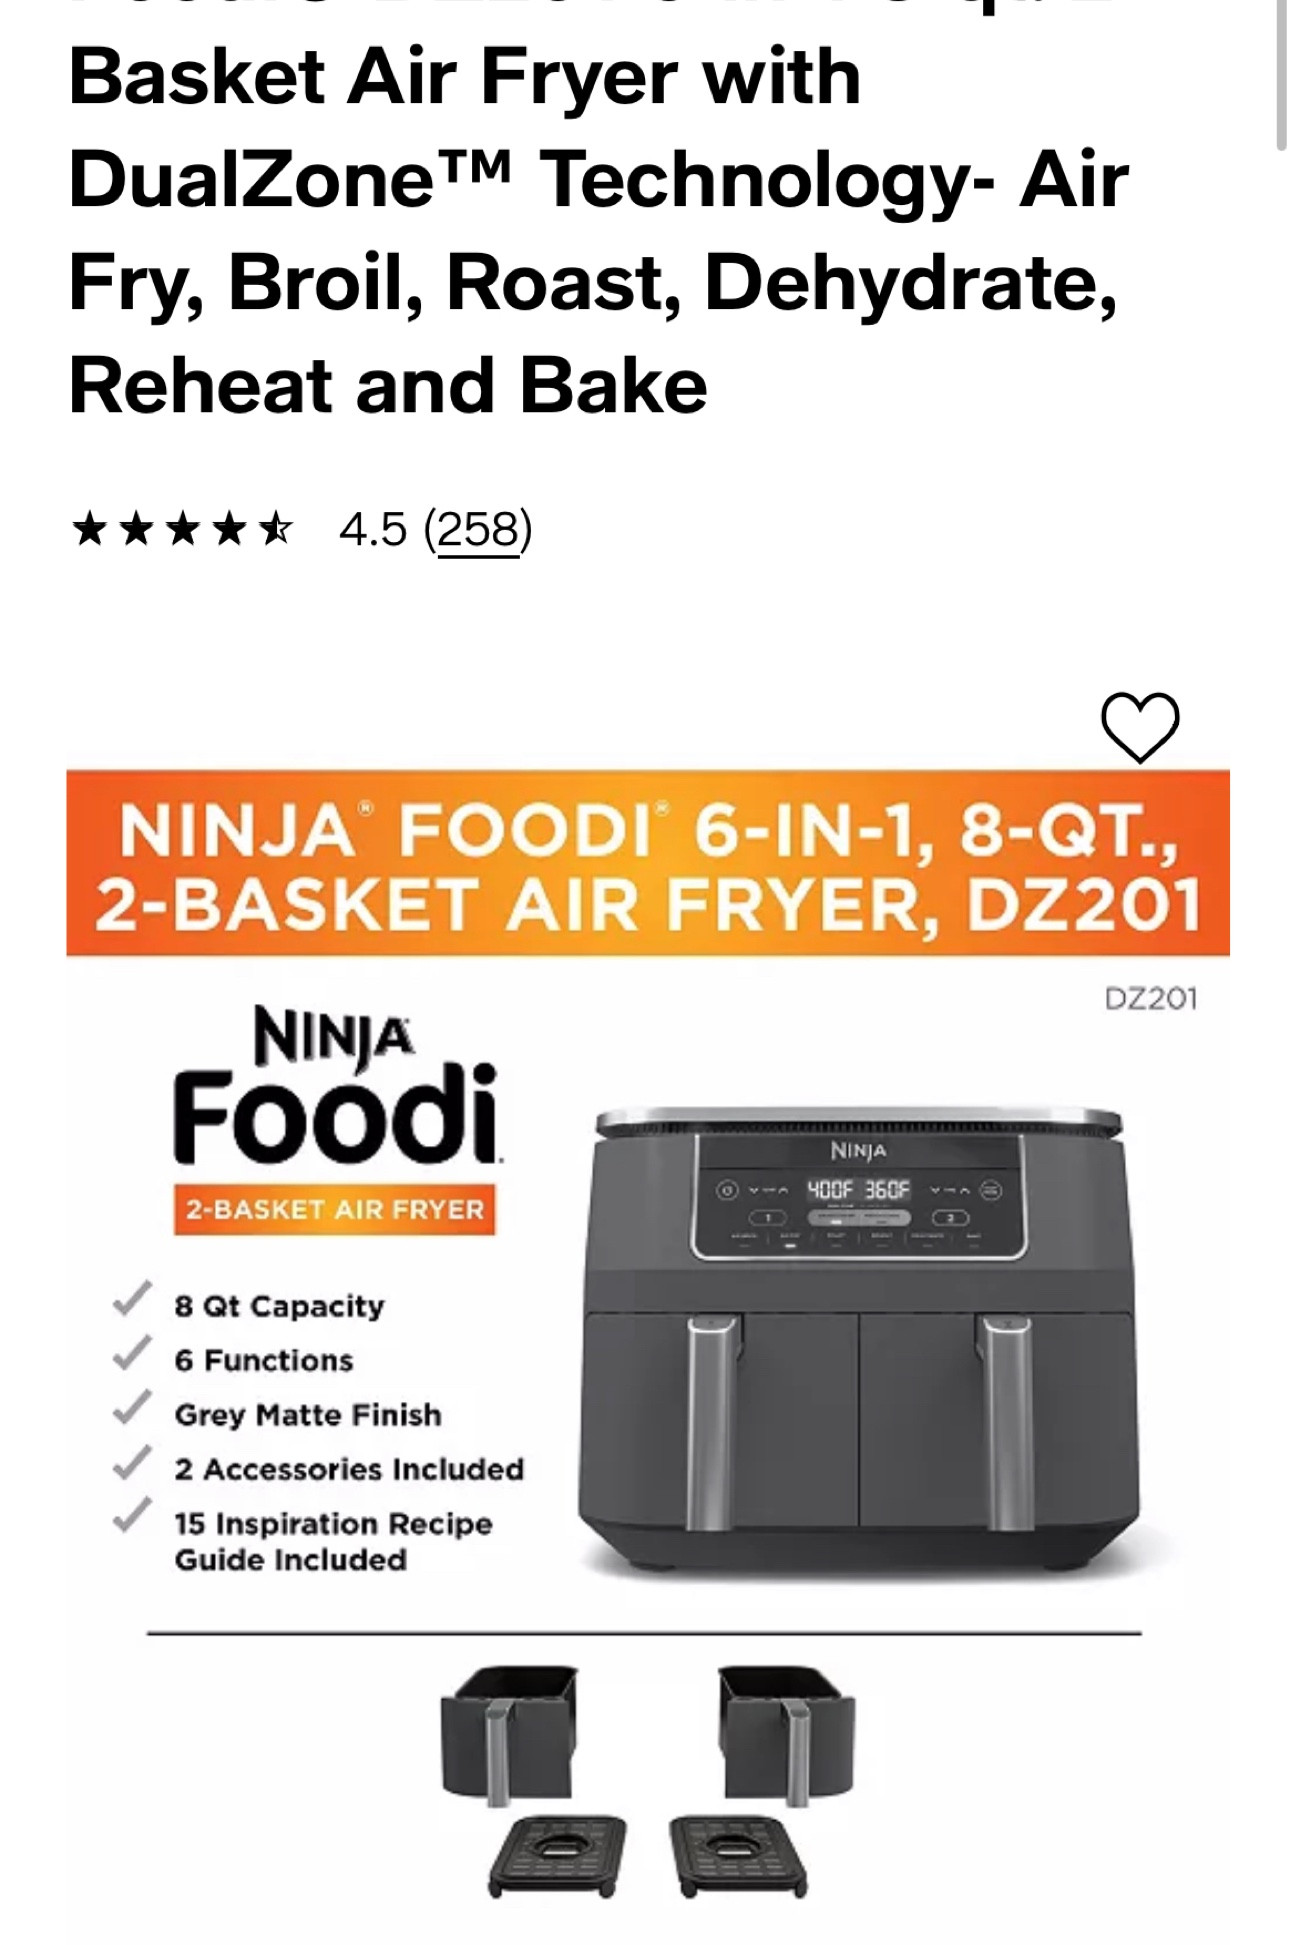 Ninja Dz201 Foodi 6-in-1 2-Basket Air Fryer with DualZone Technology, 8-Quart